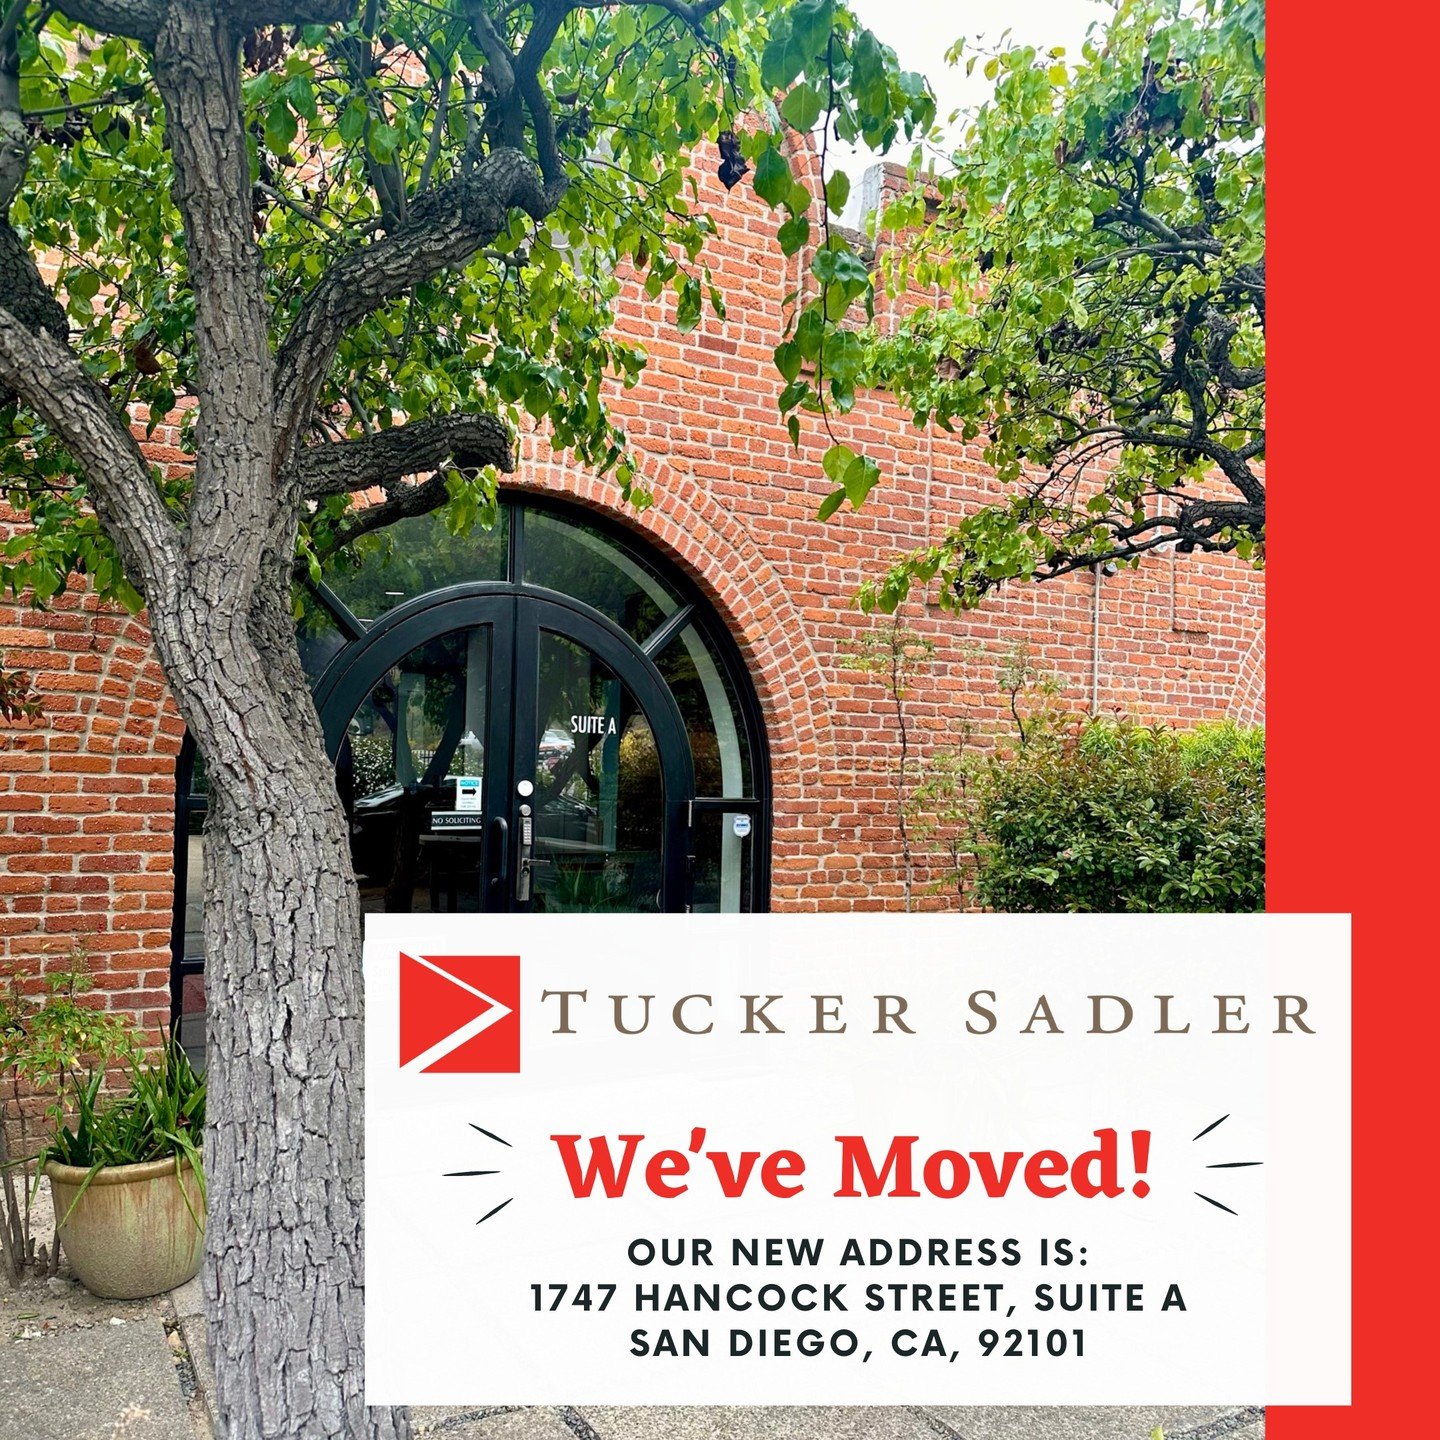 We've moved! Tucker Sadler's new address is 1747 Hancock Street, Suite A, San Diego, CA 92101.